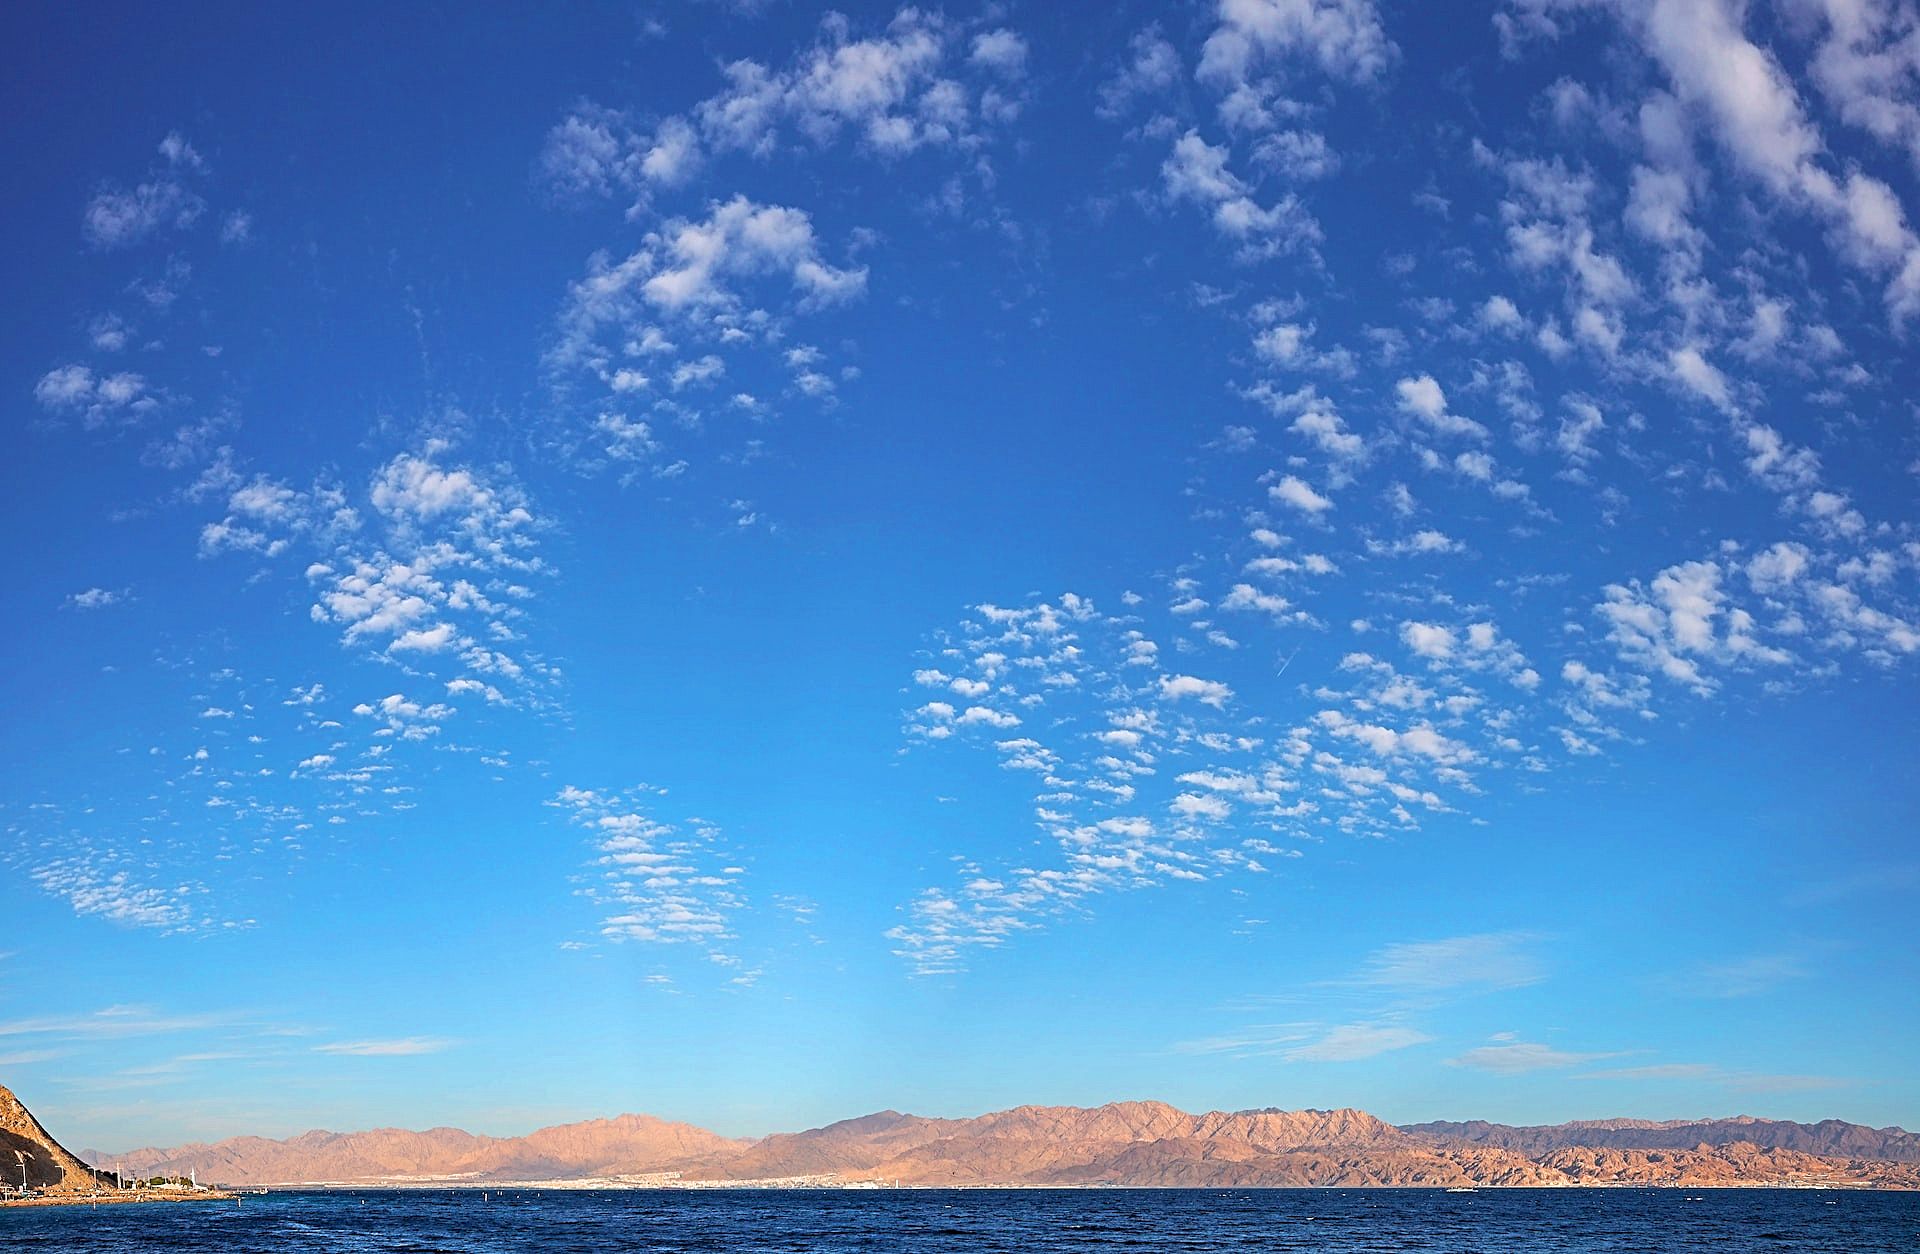 Eilat's Dolphin Reef, Israel